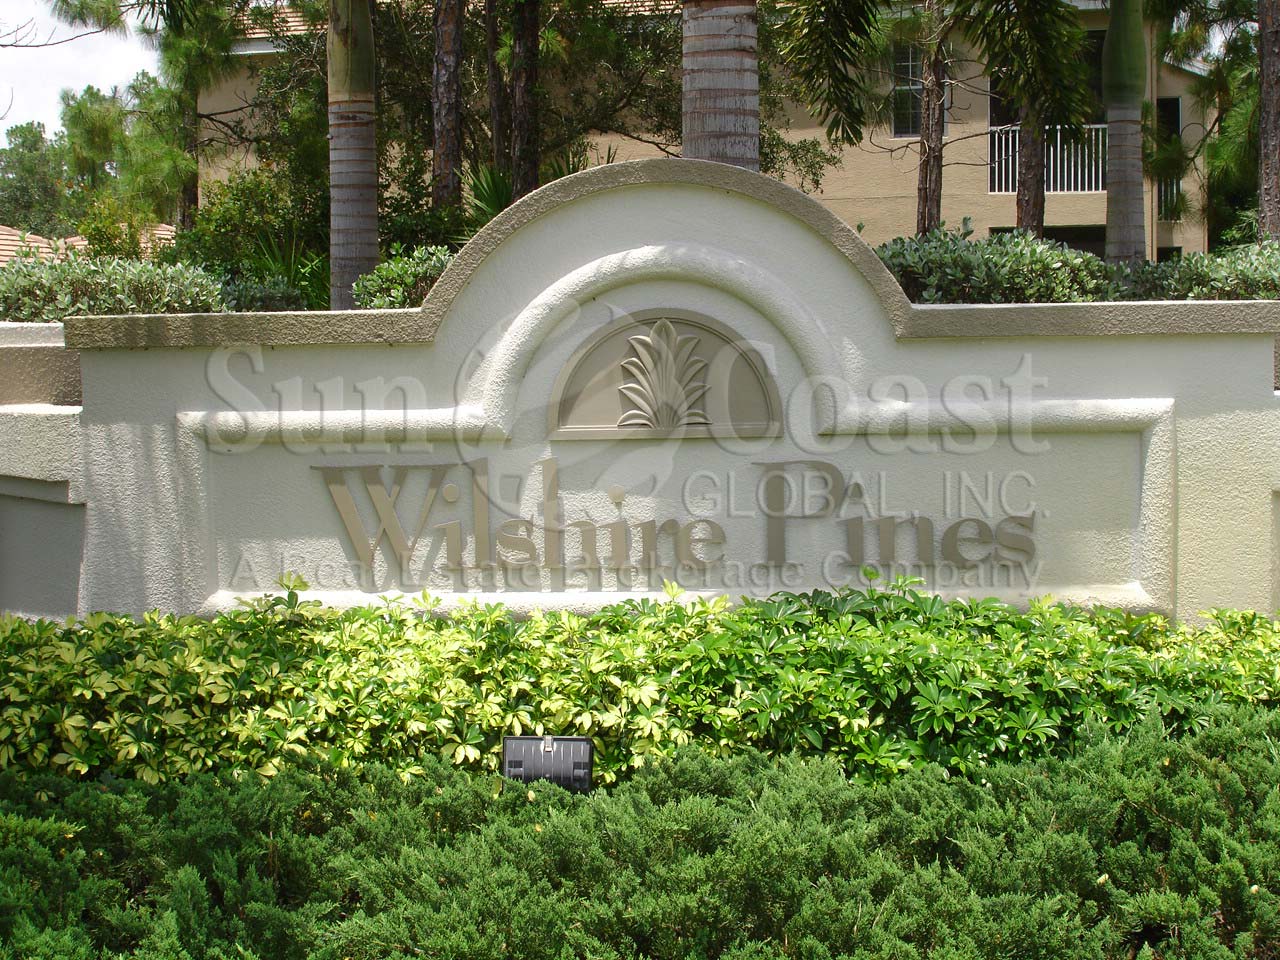 Wilshire Pines signage